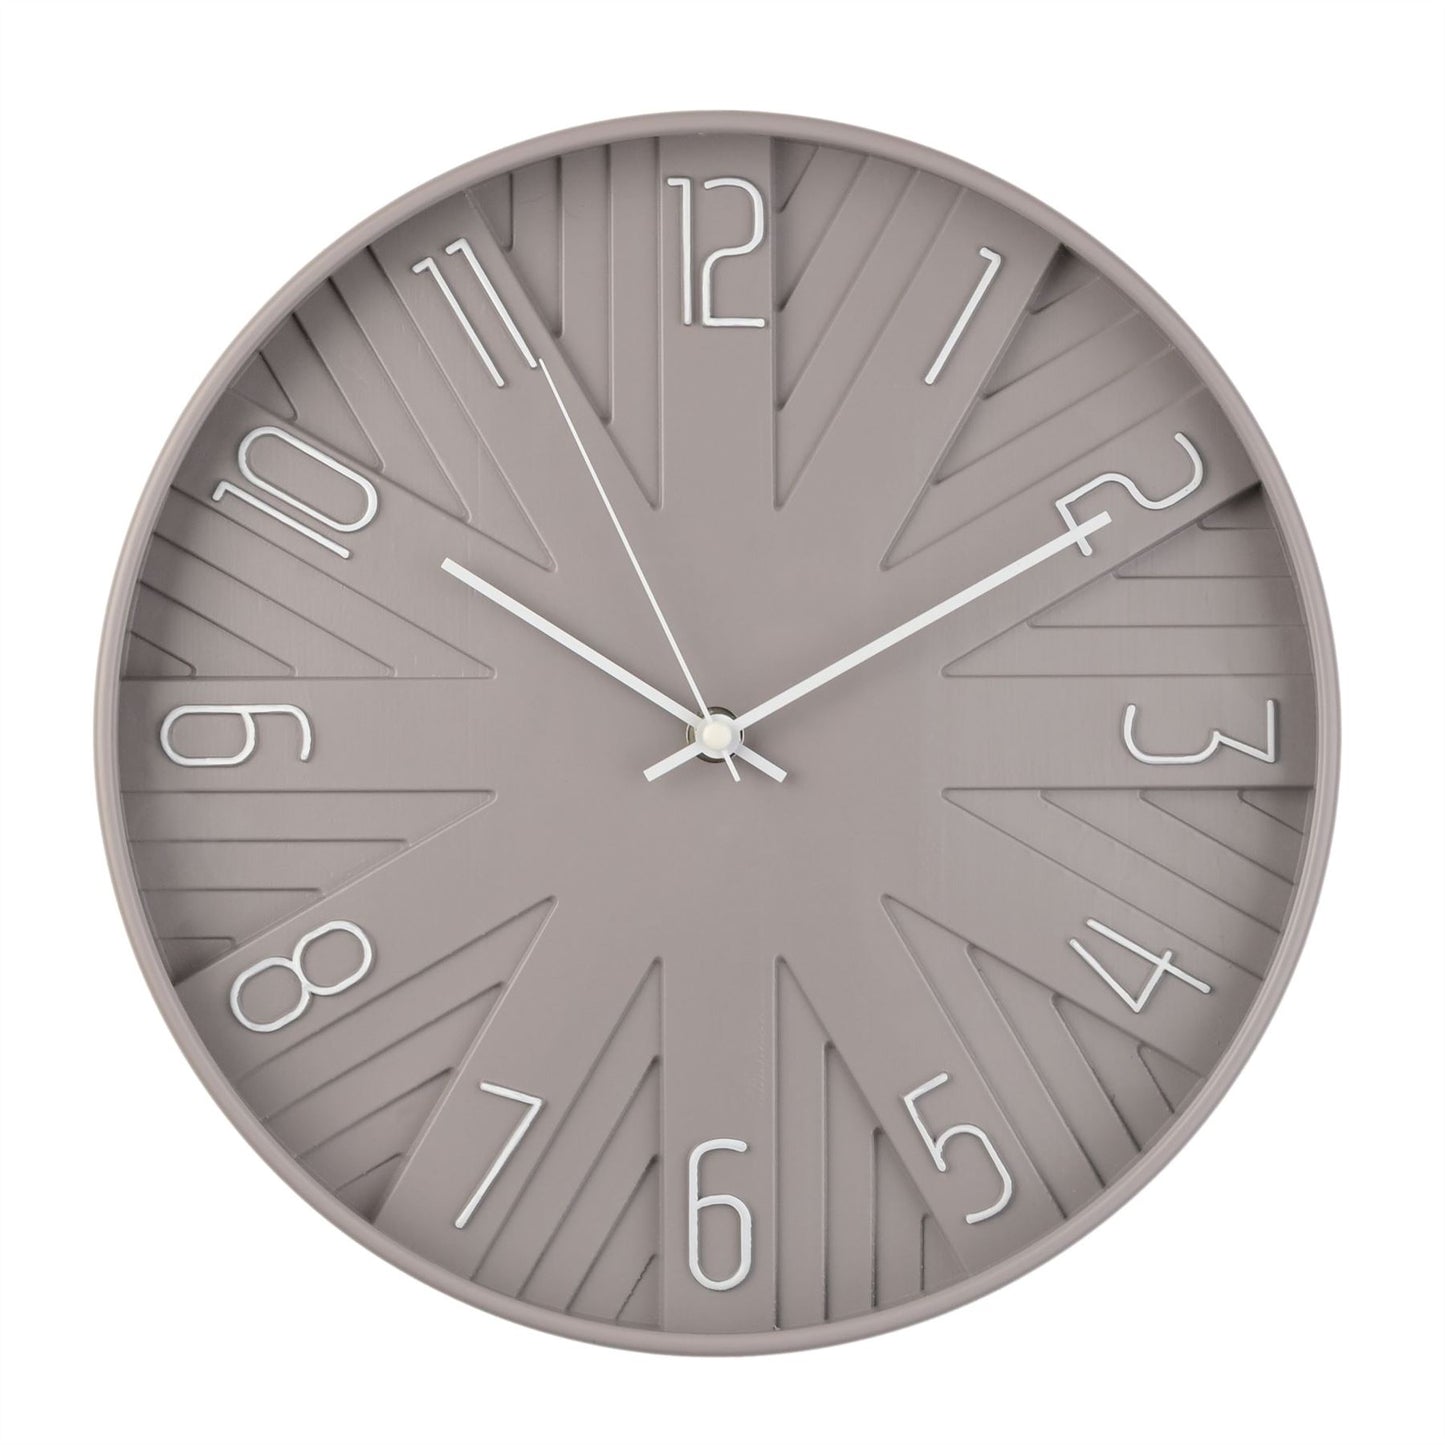 Hometime Round Wall Clock Dove Grey